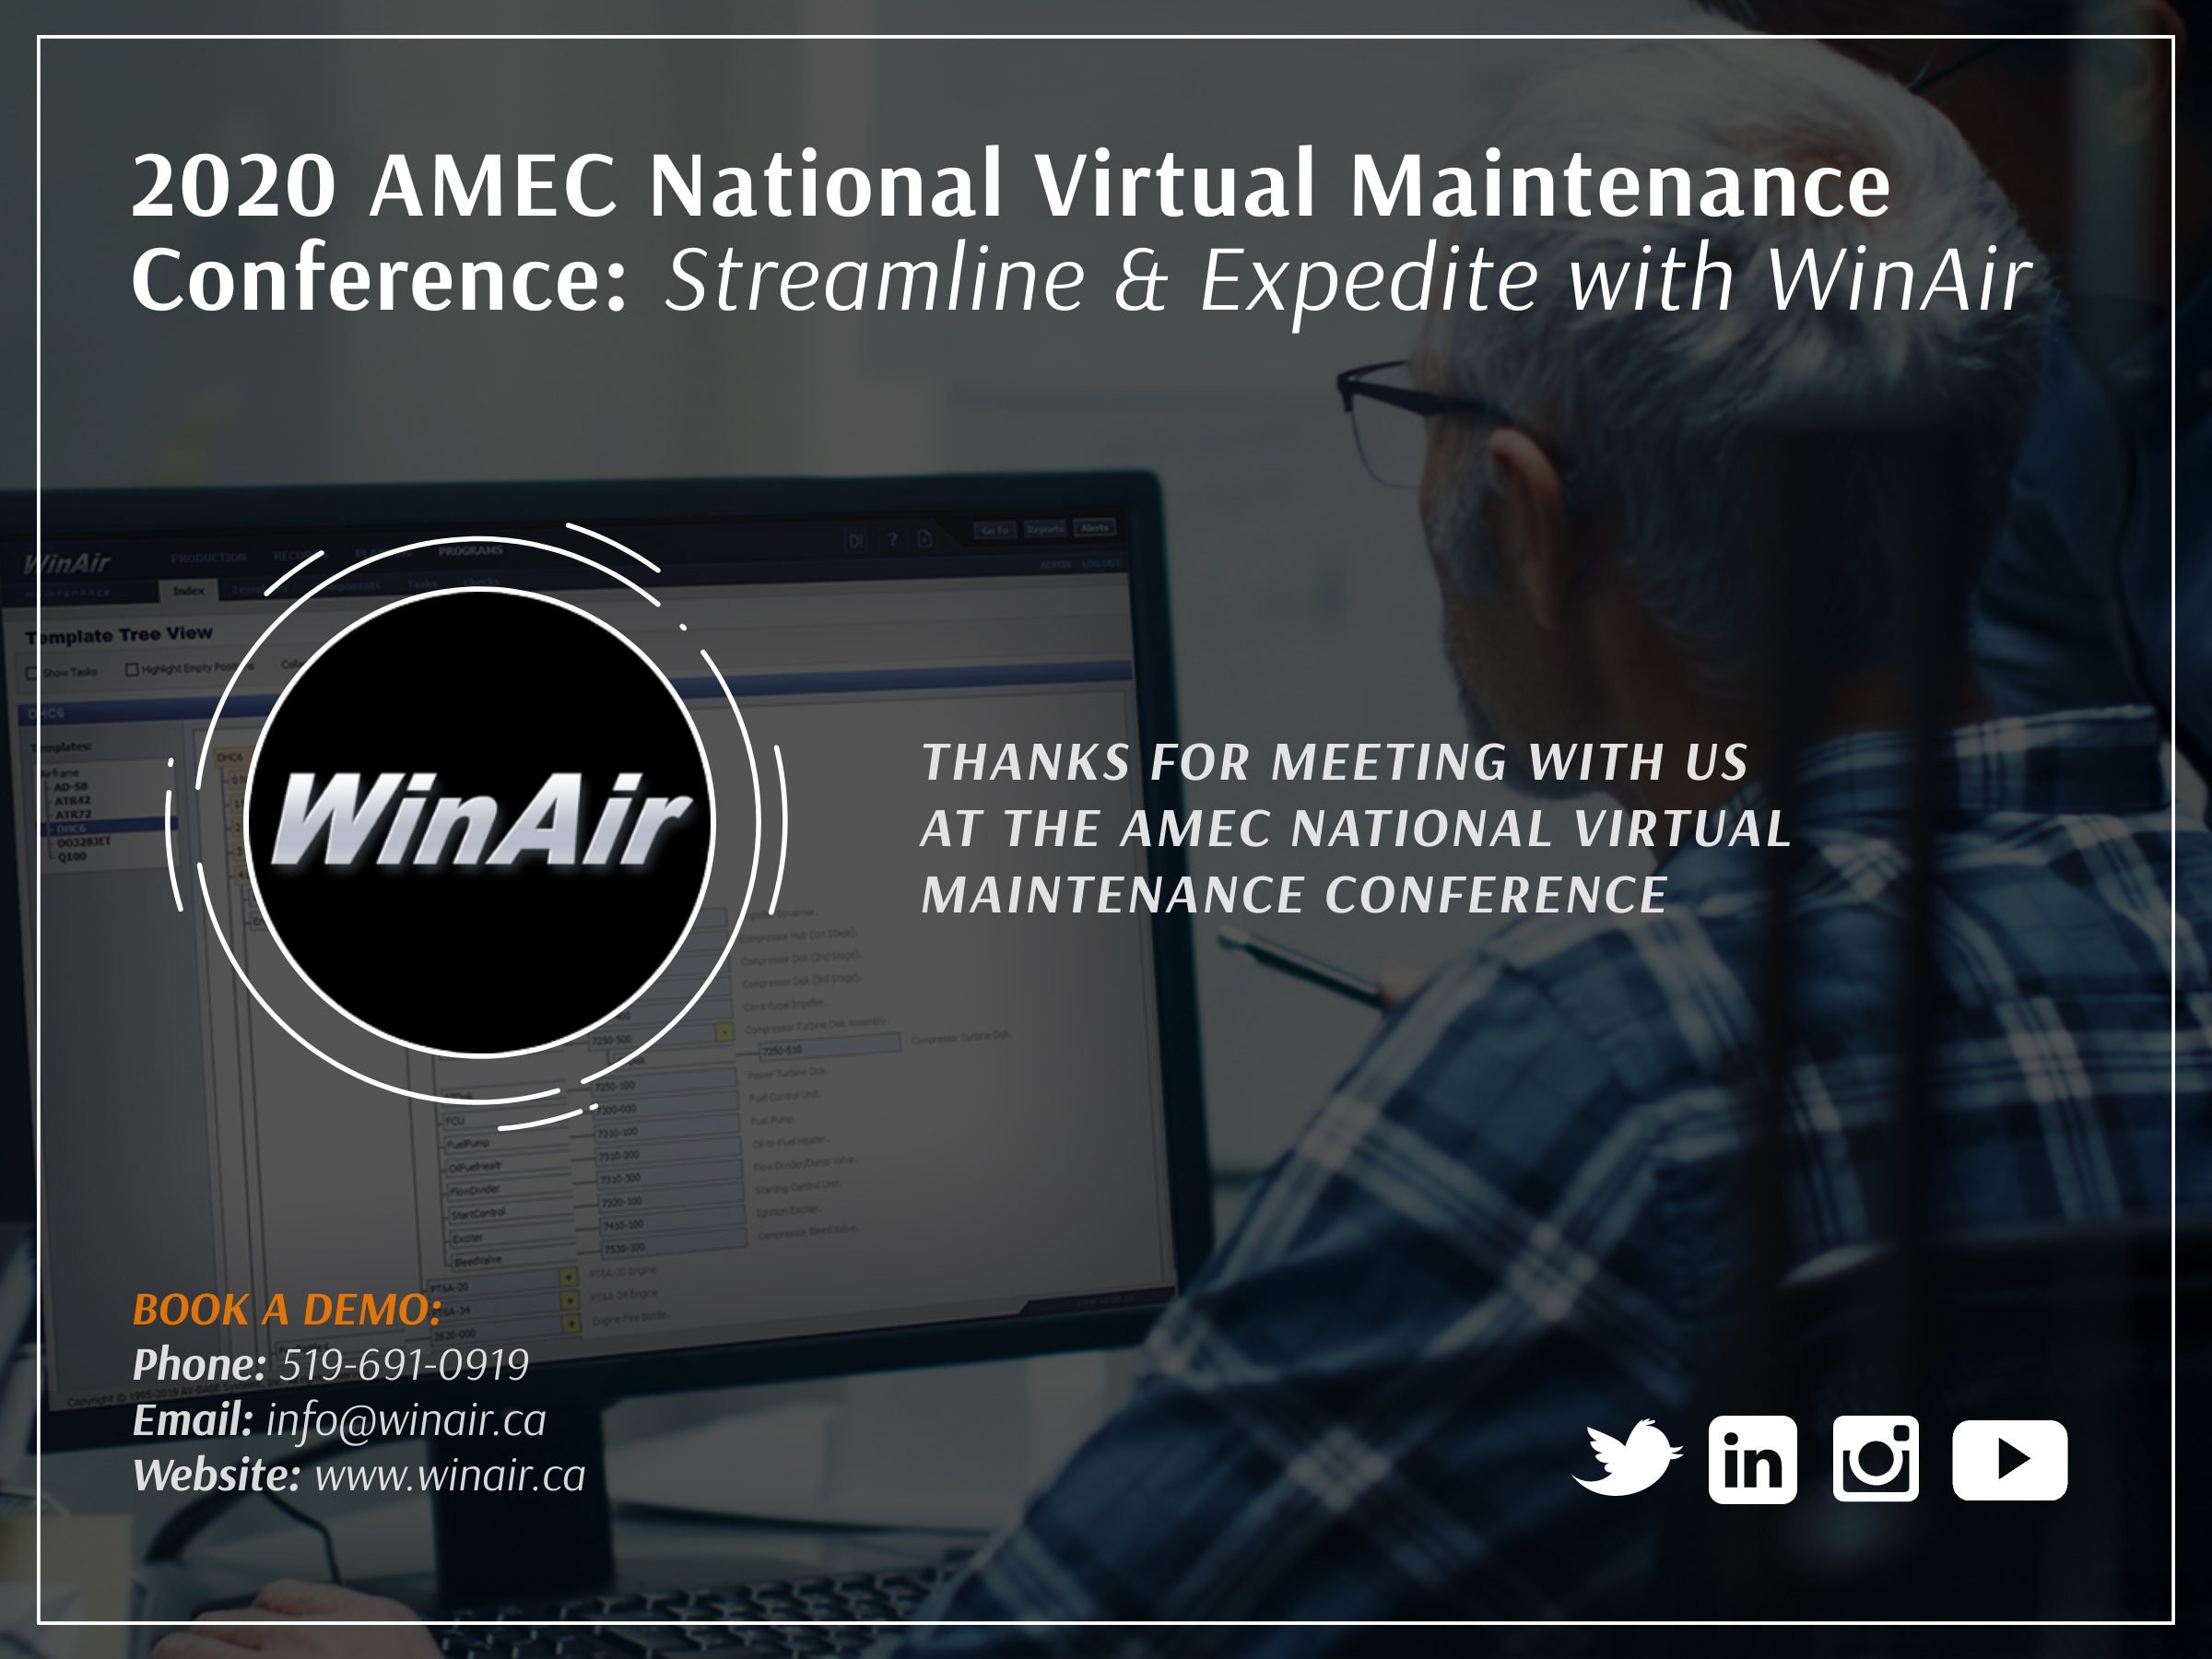 WinAir at the 2020 AMEC National Virtual Maintenance Conference - Promotional Image